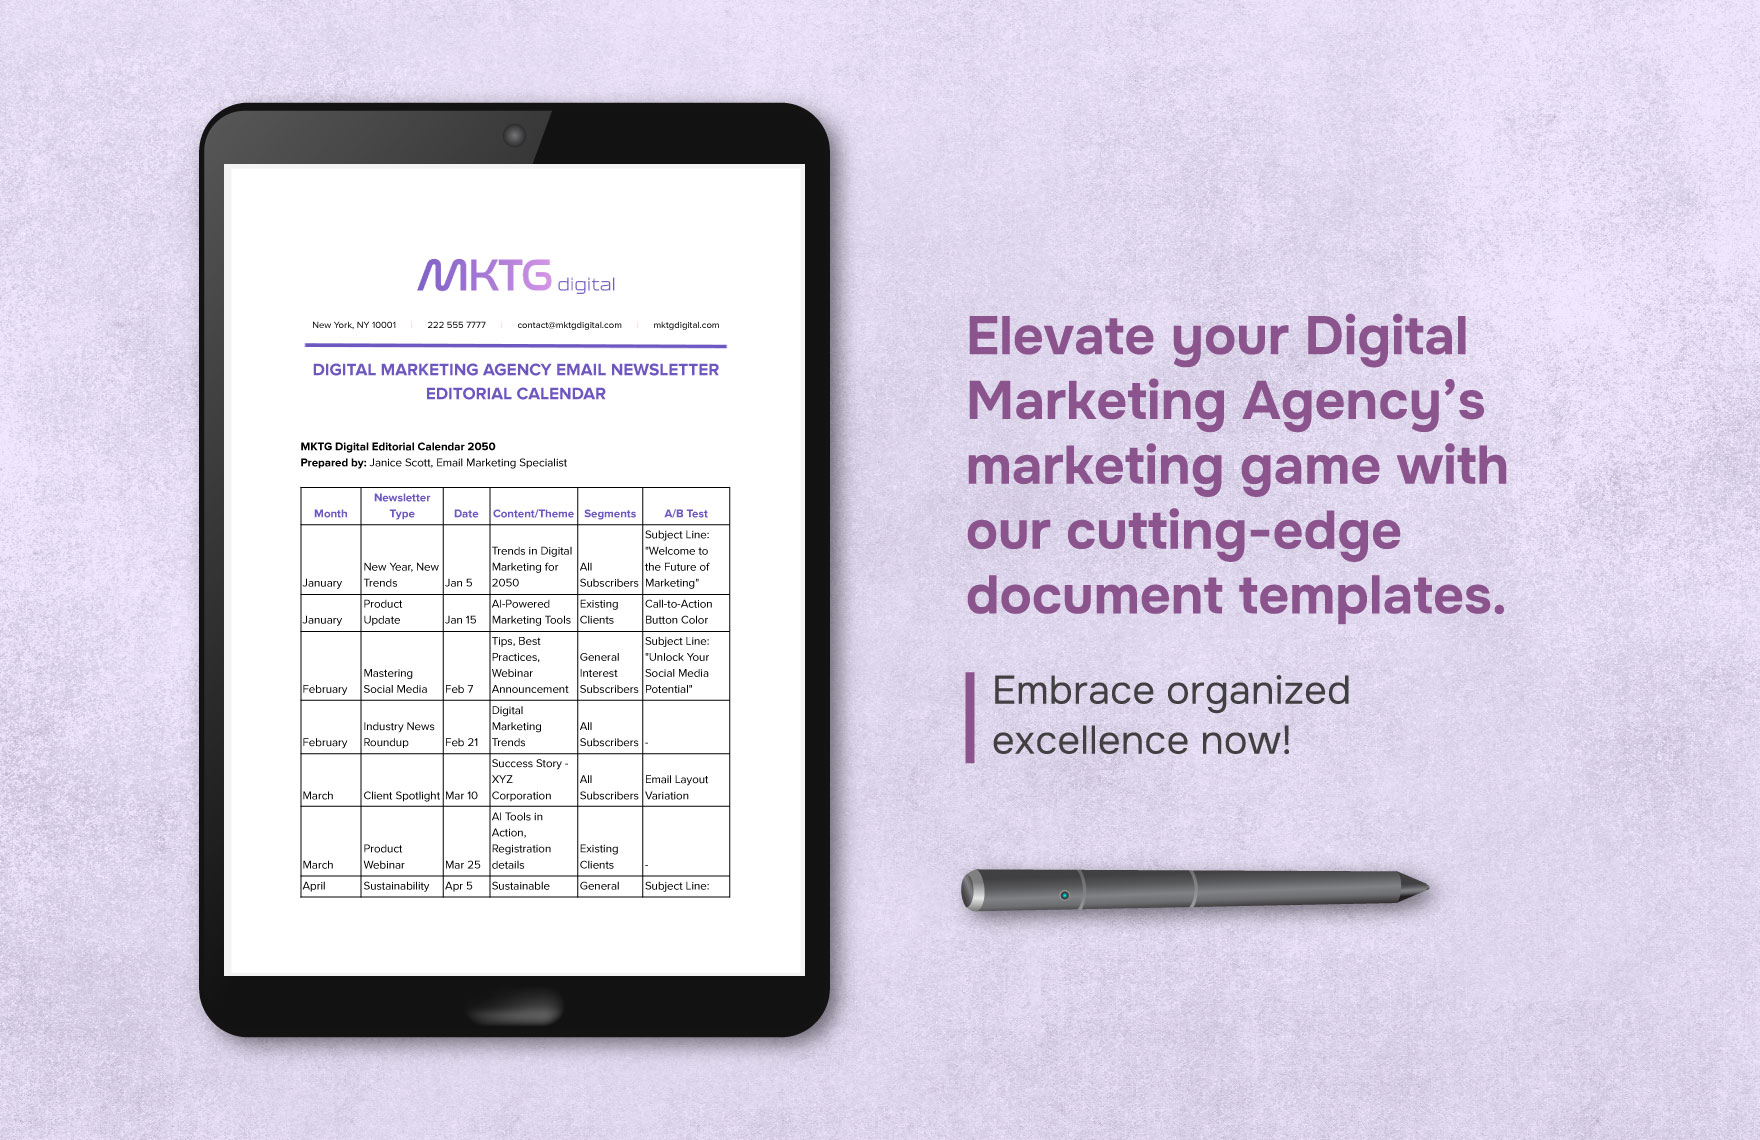 Digital Marketing Agency Email Newsletter Editorial Calendar Template